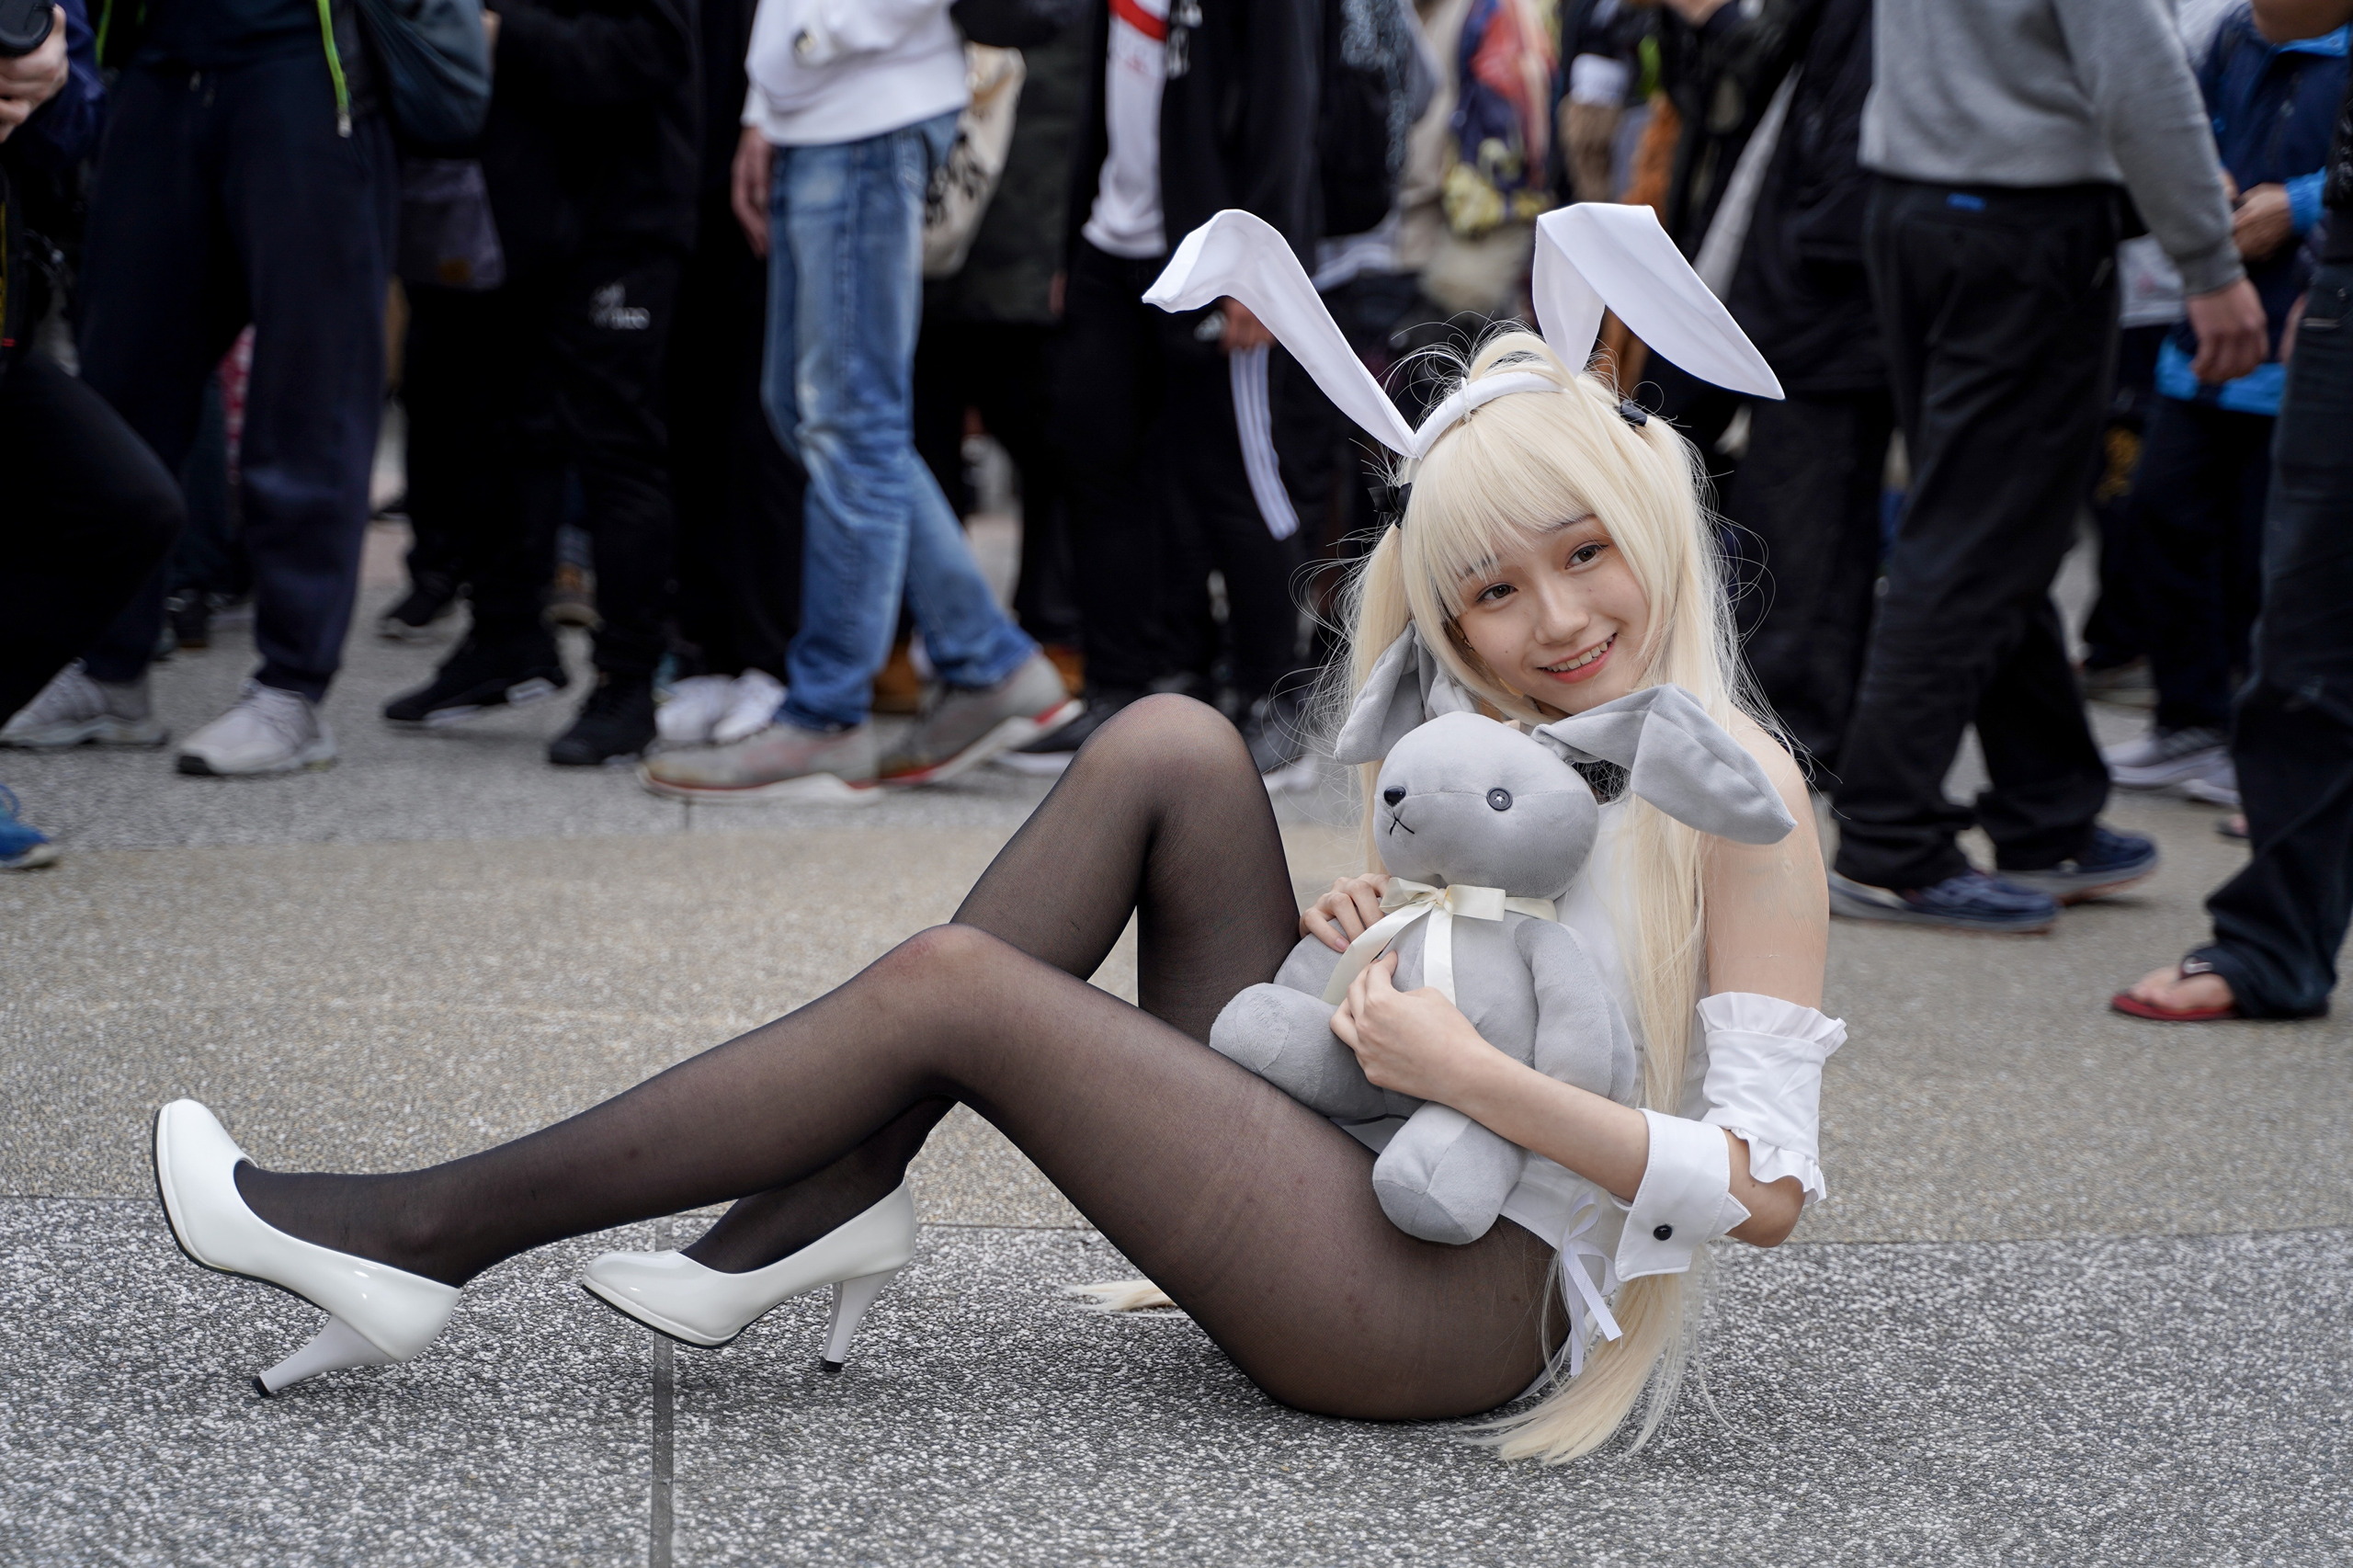 Asian Model Women Long Hair Bunny Ears Plush Toy White Heels Cosplay Sitting 2560x1706